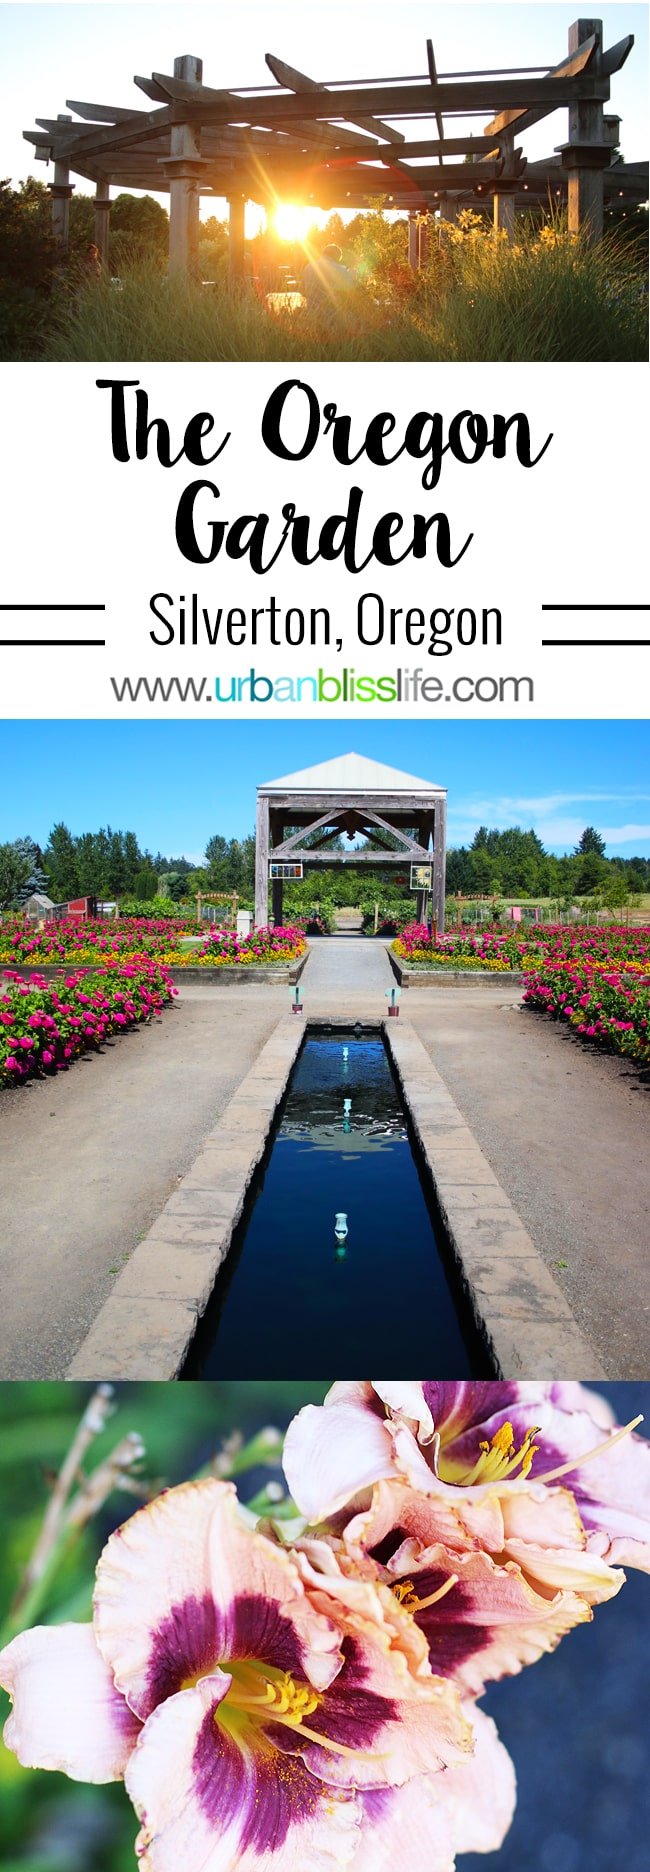 The Oregon Garden travel on UrbanBlissLife.com